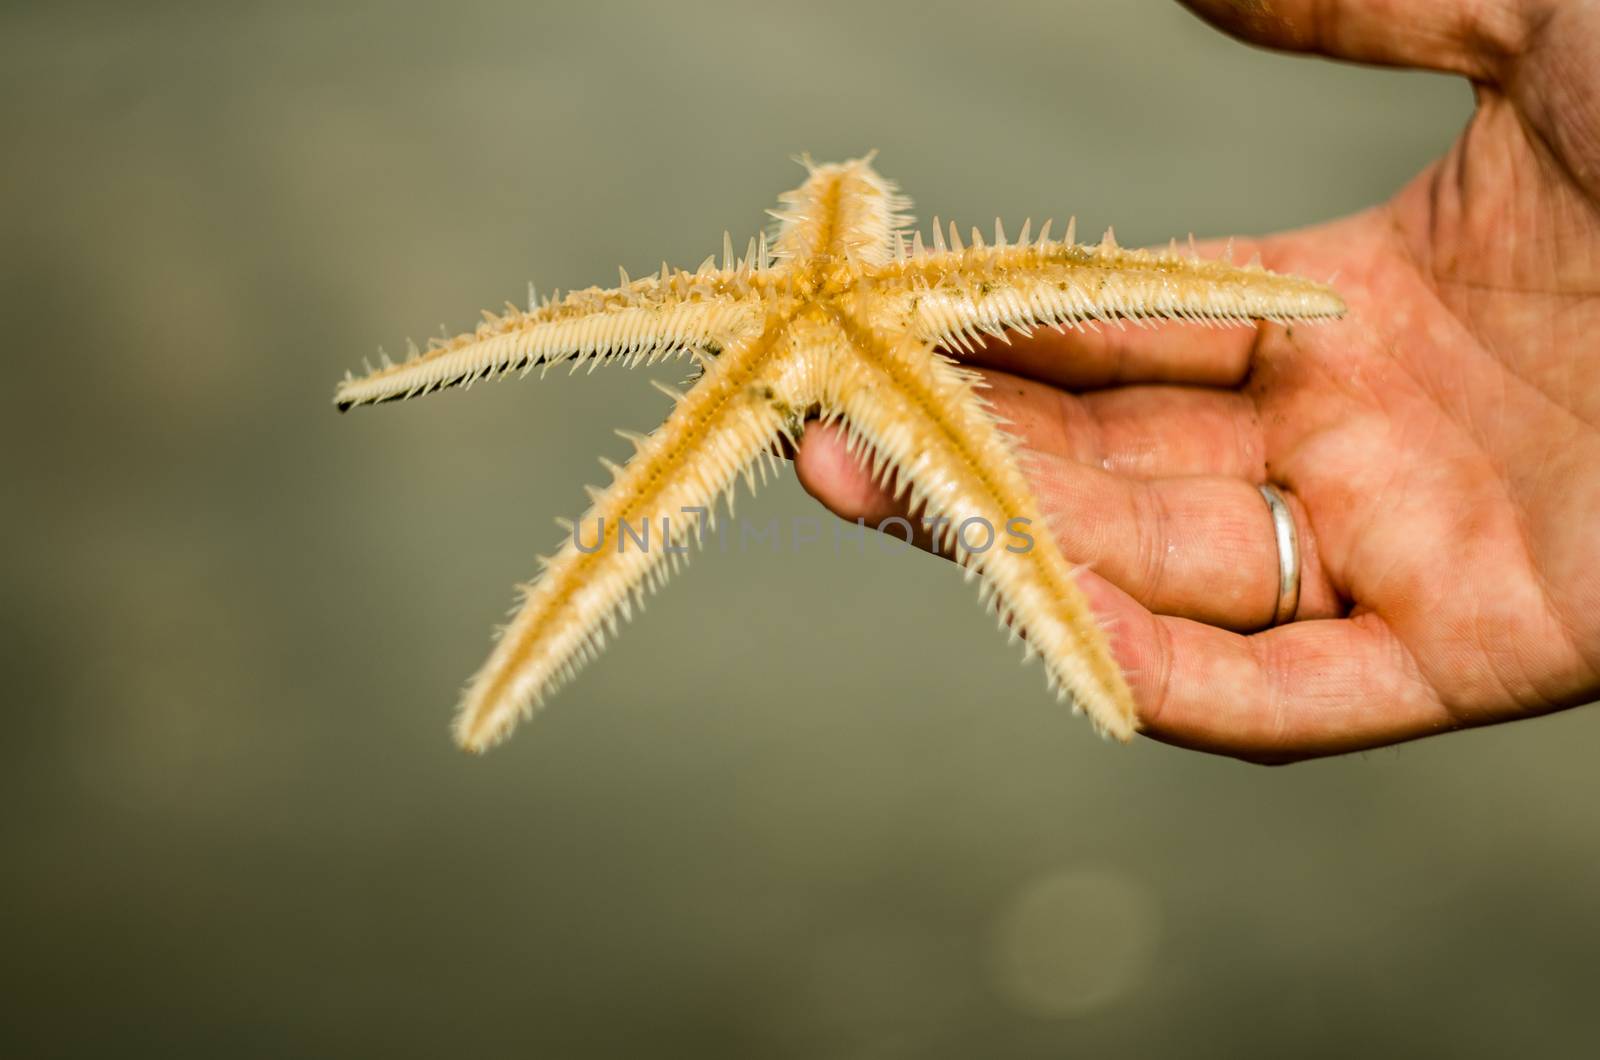 starfish on the hand